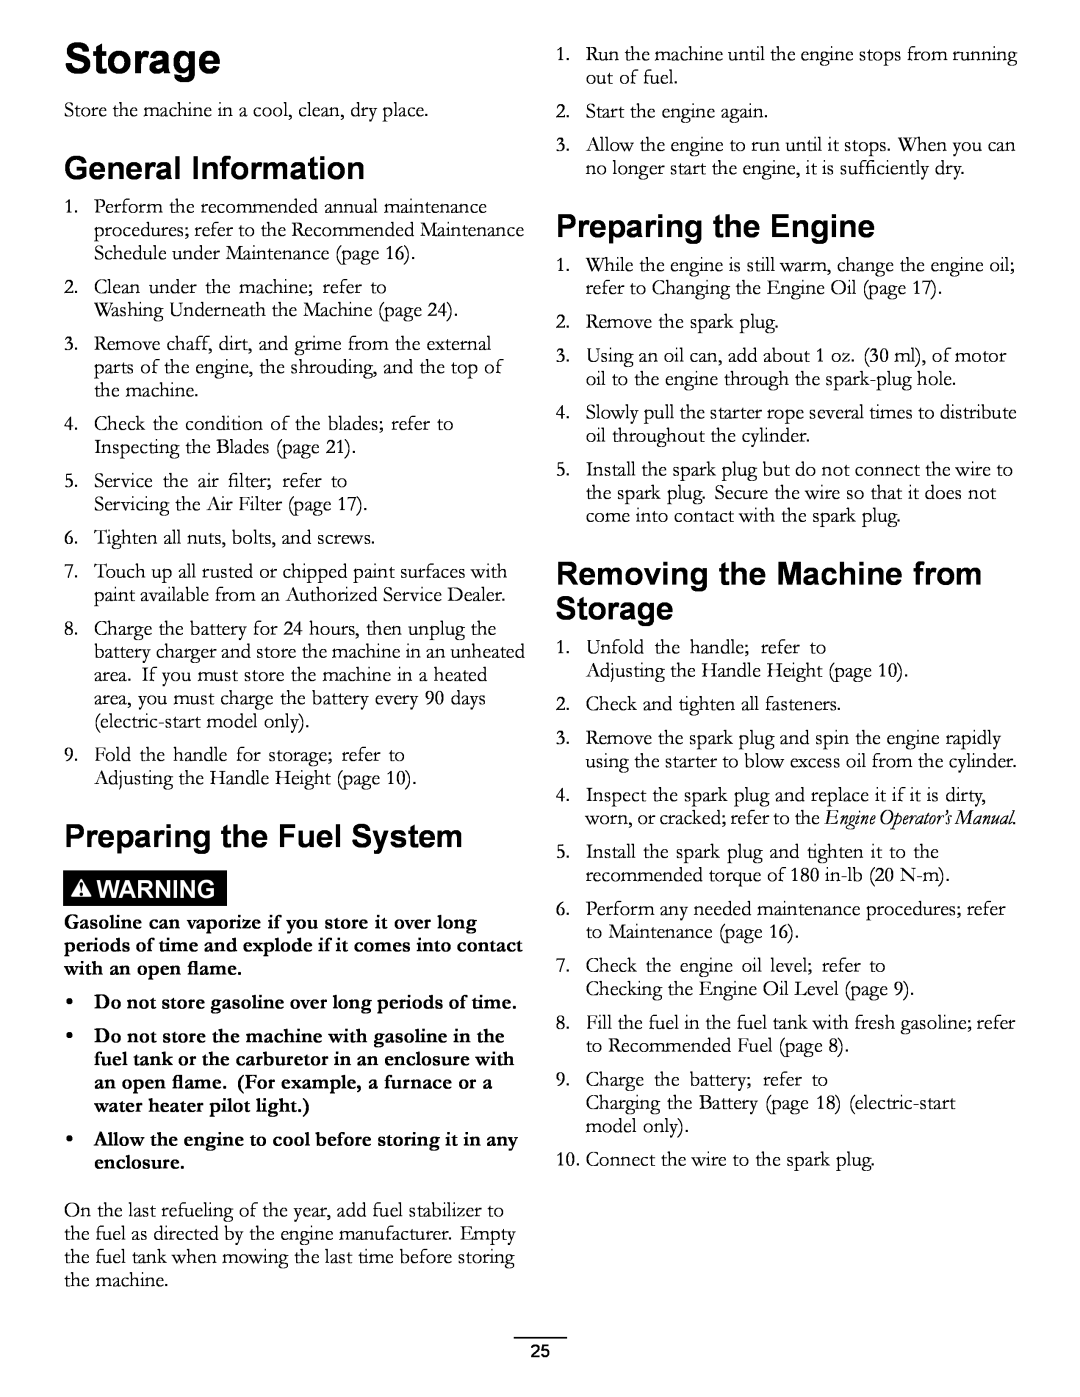 Toro 20199, 20200 owner manual Storage, General Information, Preparing the Fuel System, Preparing the Engine 